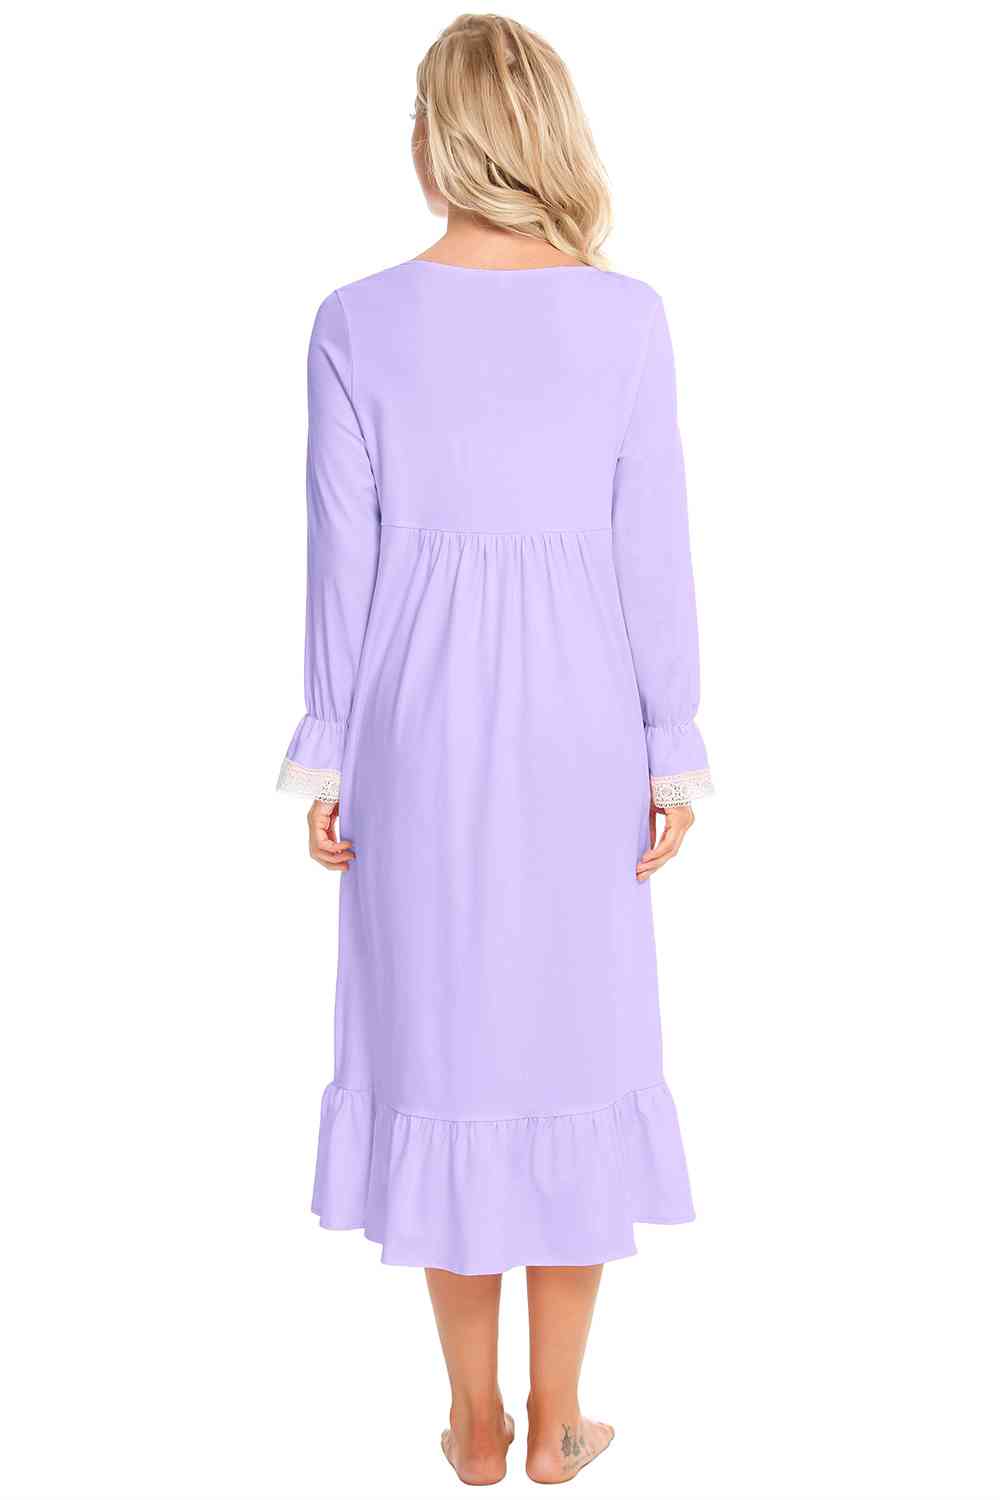 Lace Detail Square Neck Flounce Sleeve Night Dress - Sufyaa